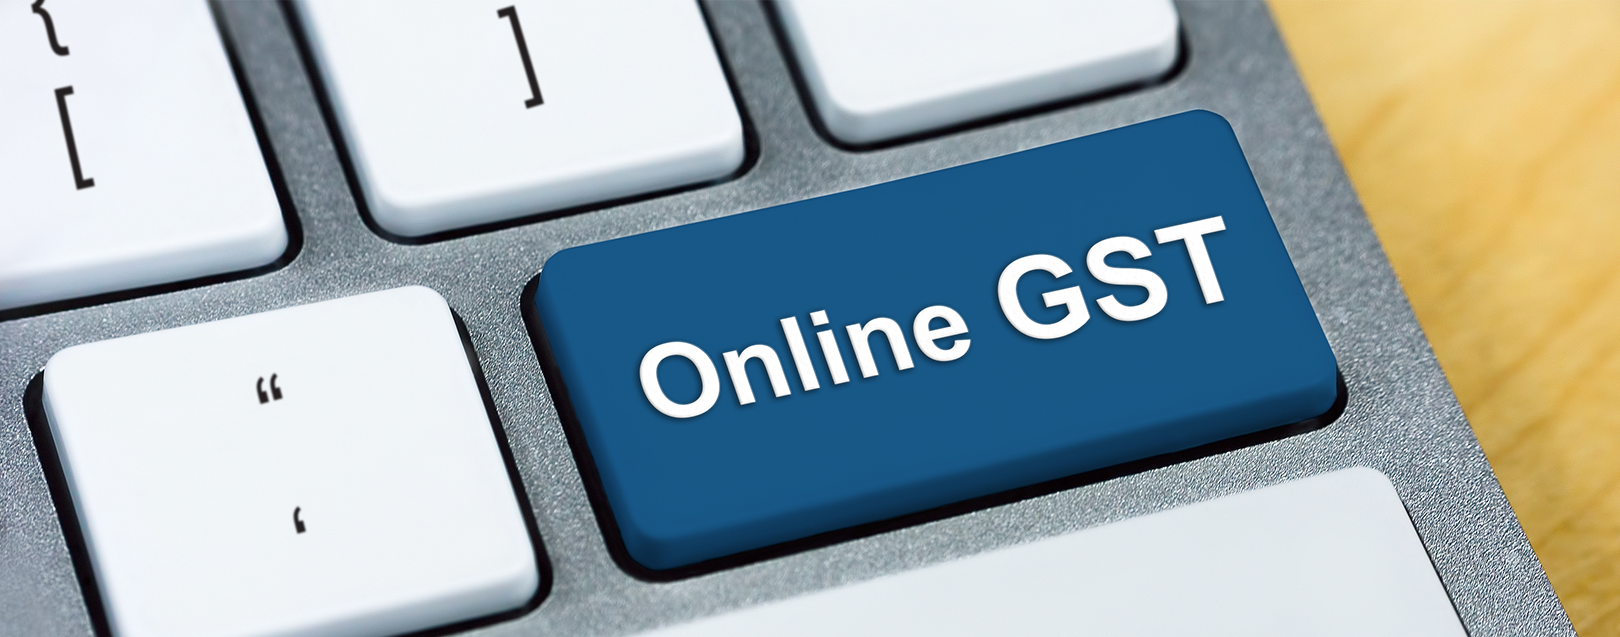 A simpler portal for GST almost ready: Navin Kumar